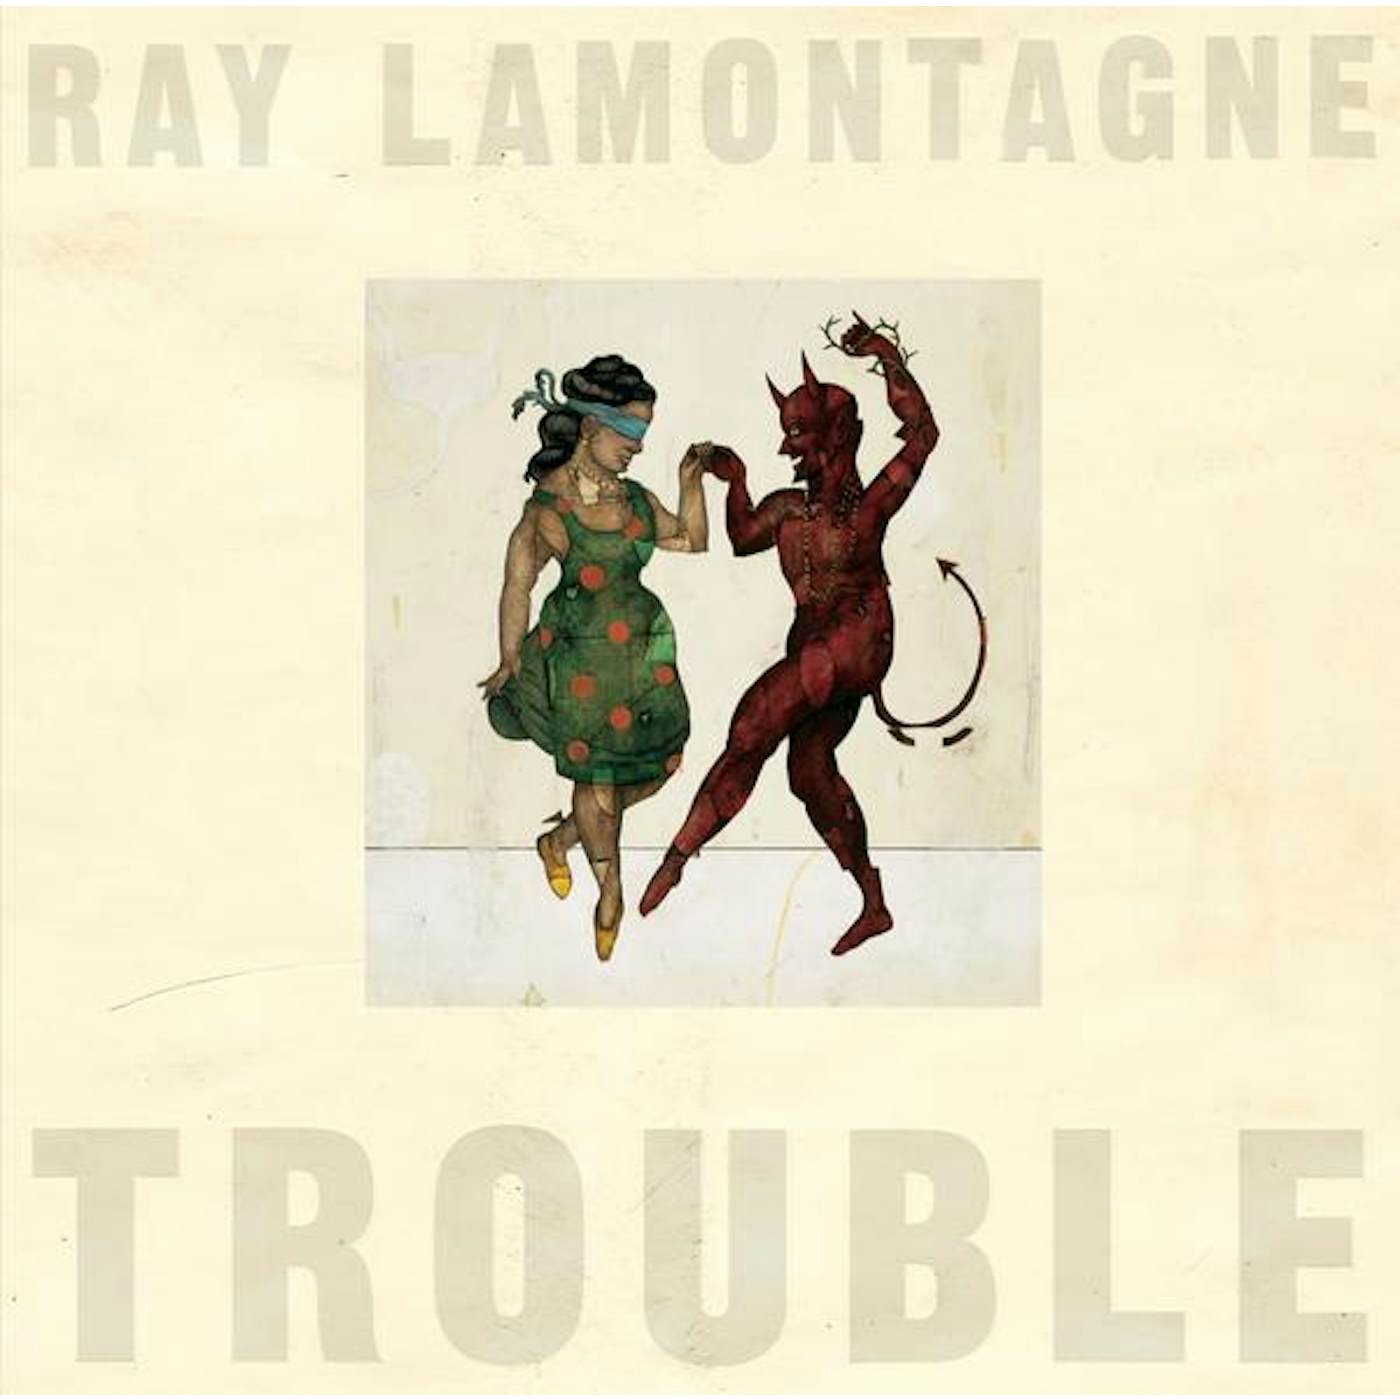 Ray LaMontagne TROUBLE (180G) Vinyl Record